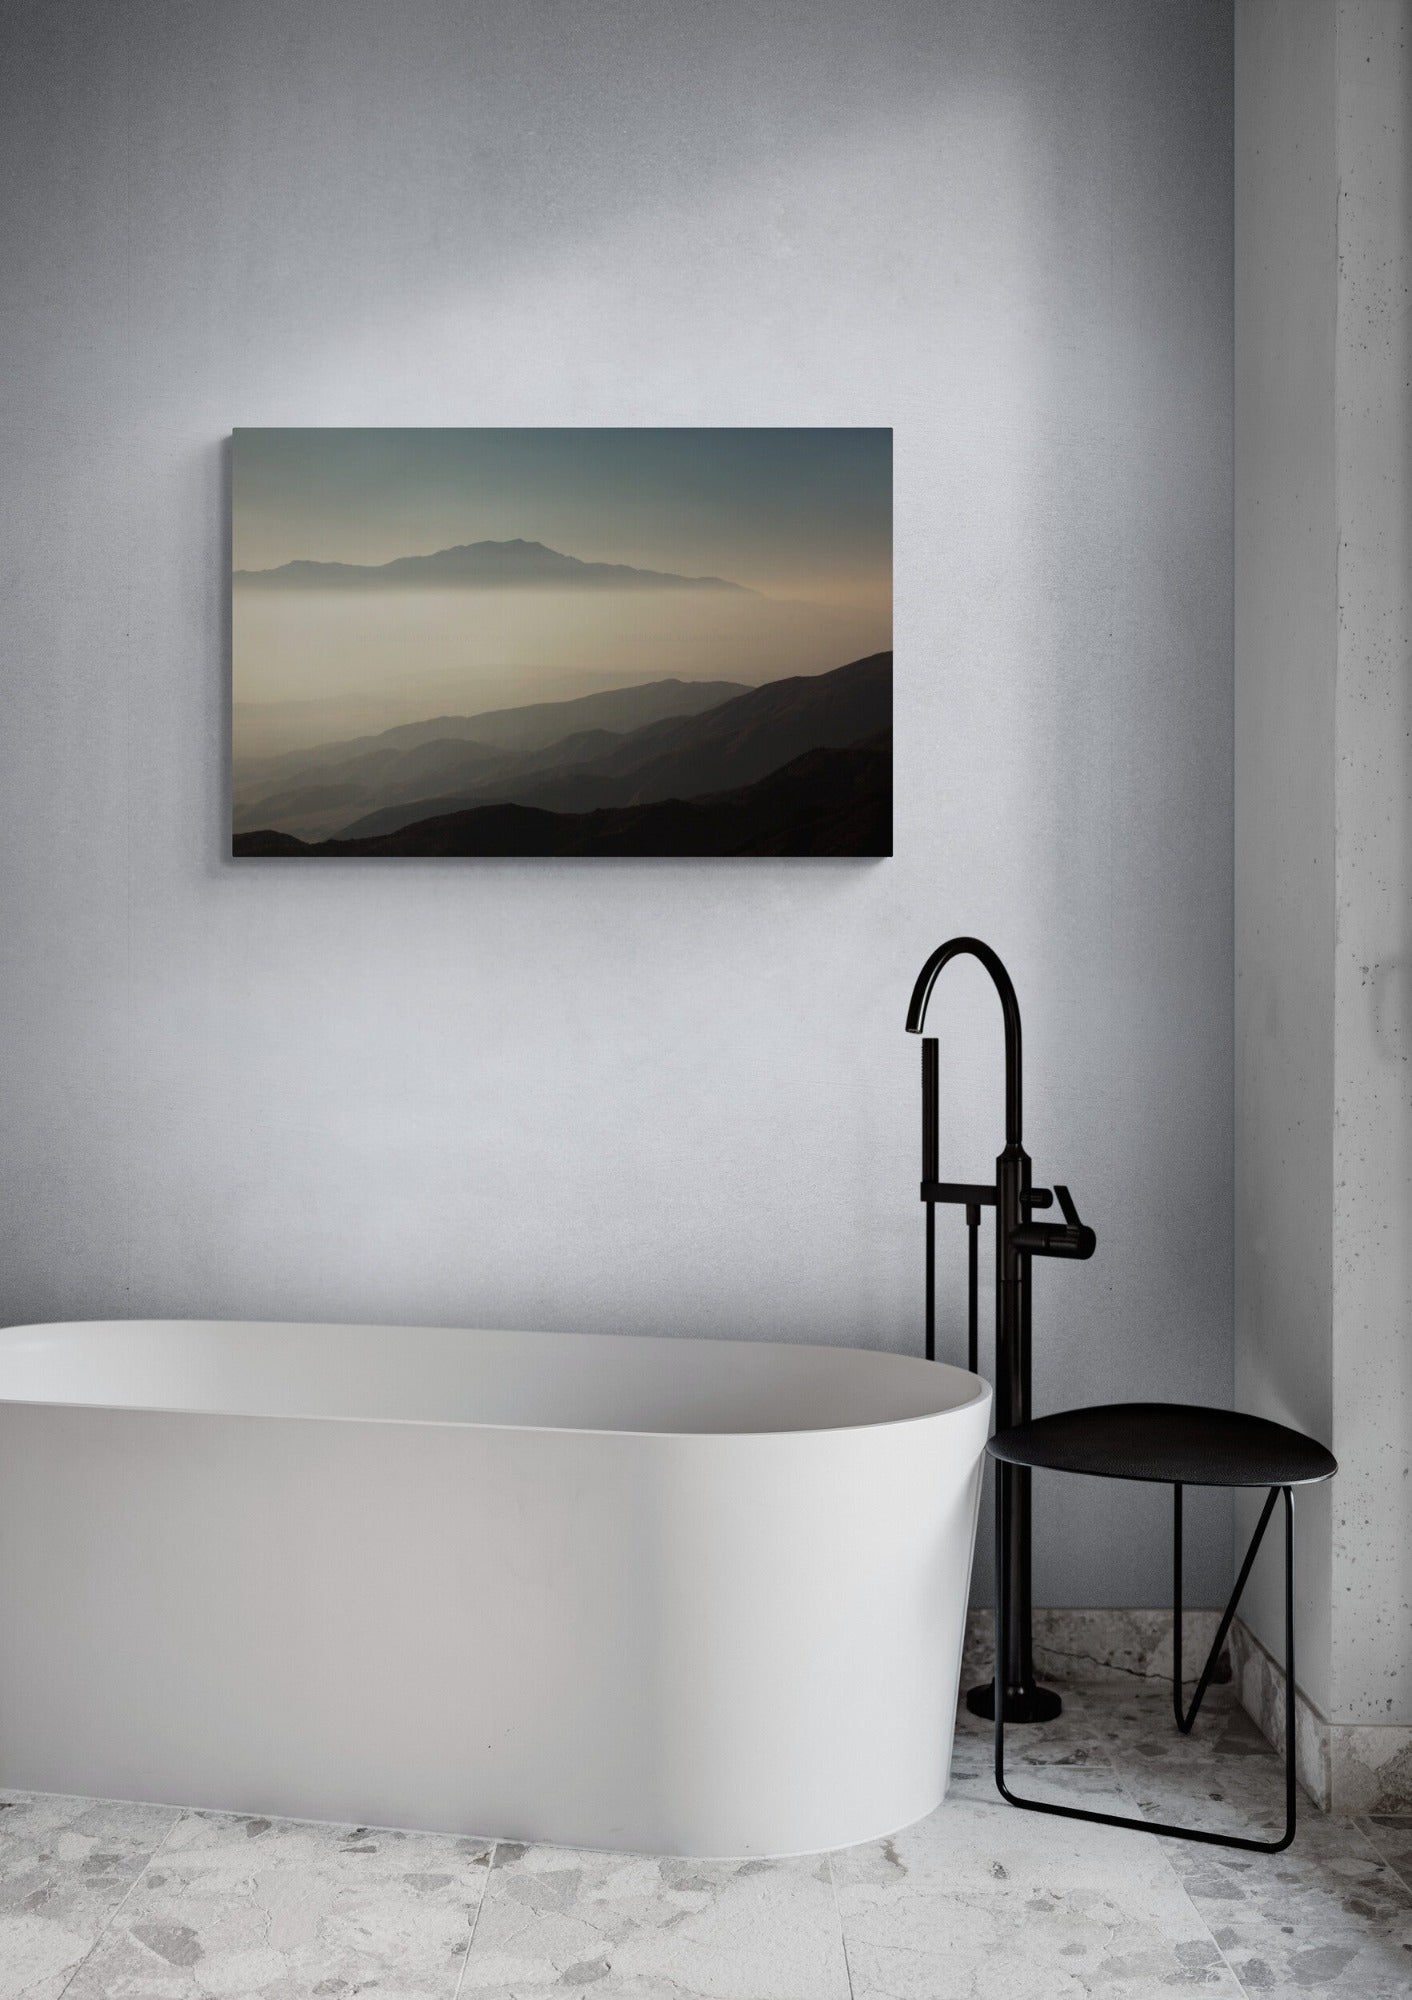 Canvas of a photograph of california mountains in a bathroom as wall art